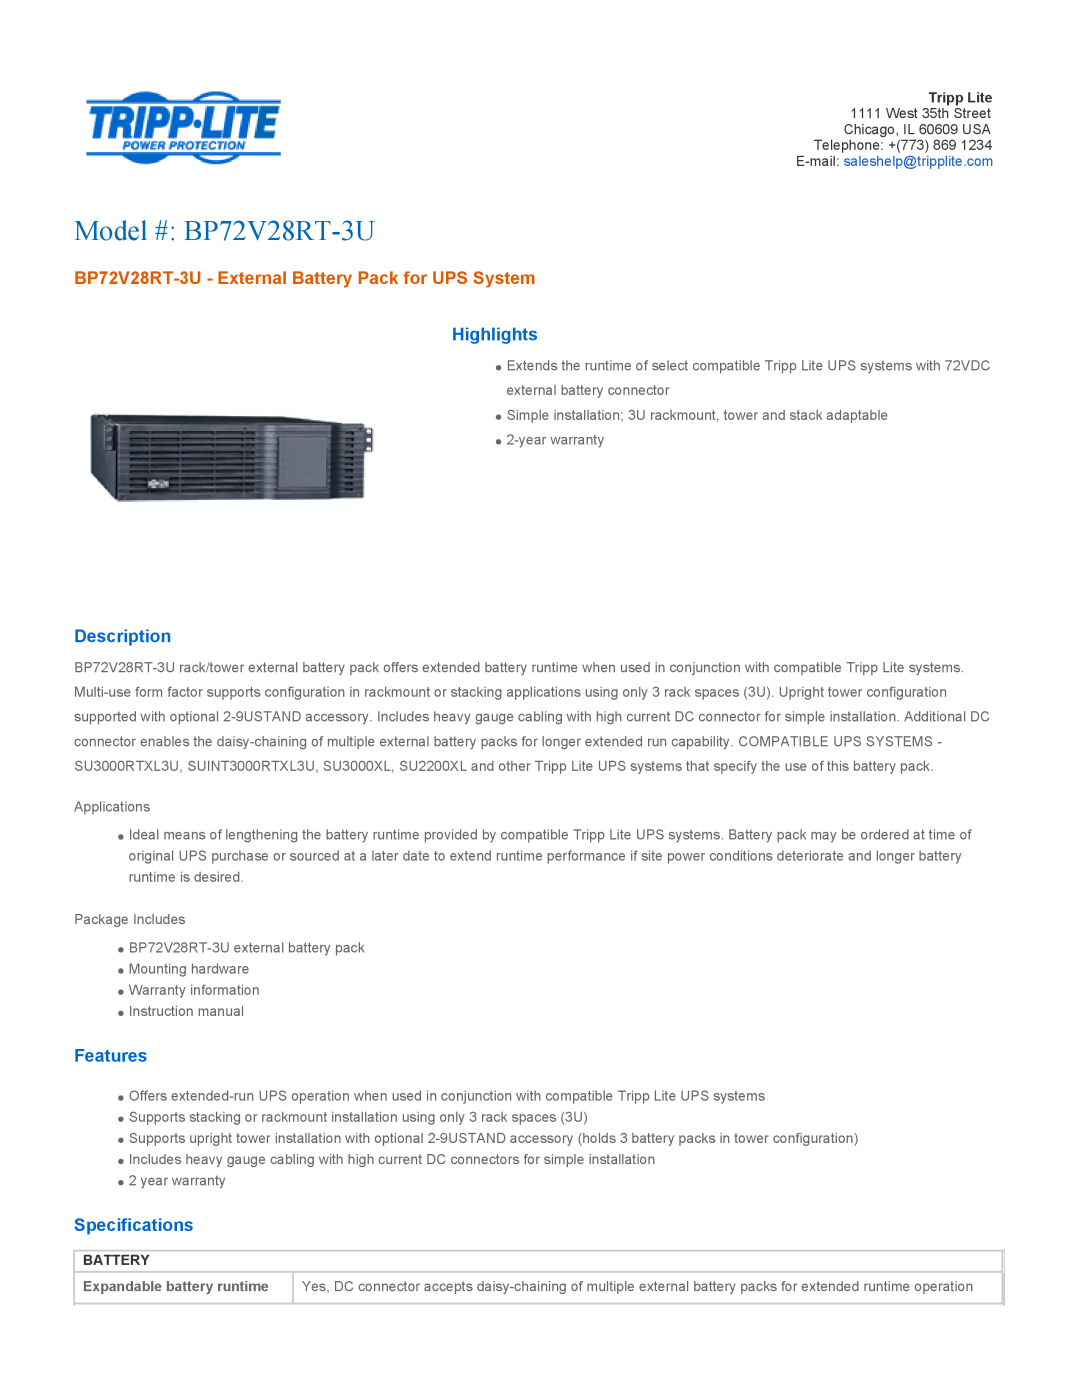 Tripp Lite specifications Highlights, Description, Features, Specifications, Battery, Model # BP72V28RT-3U 